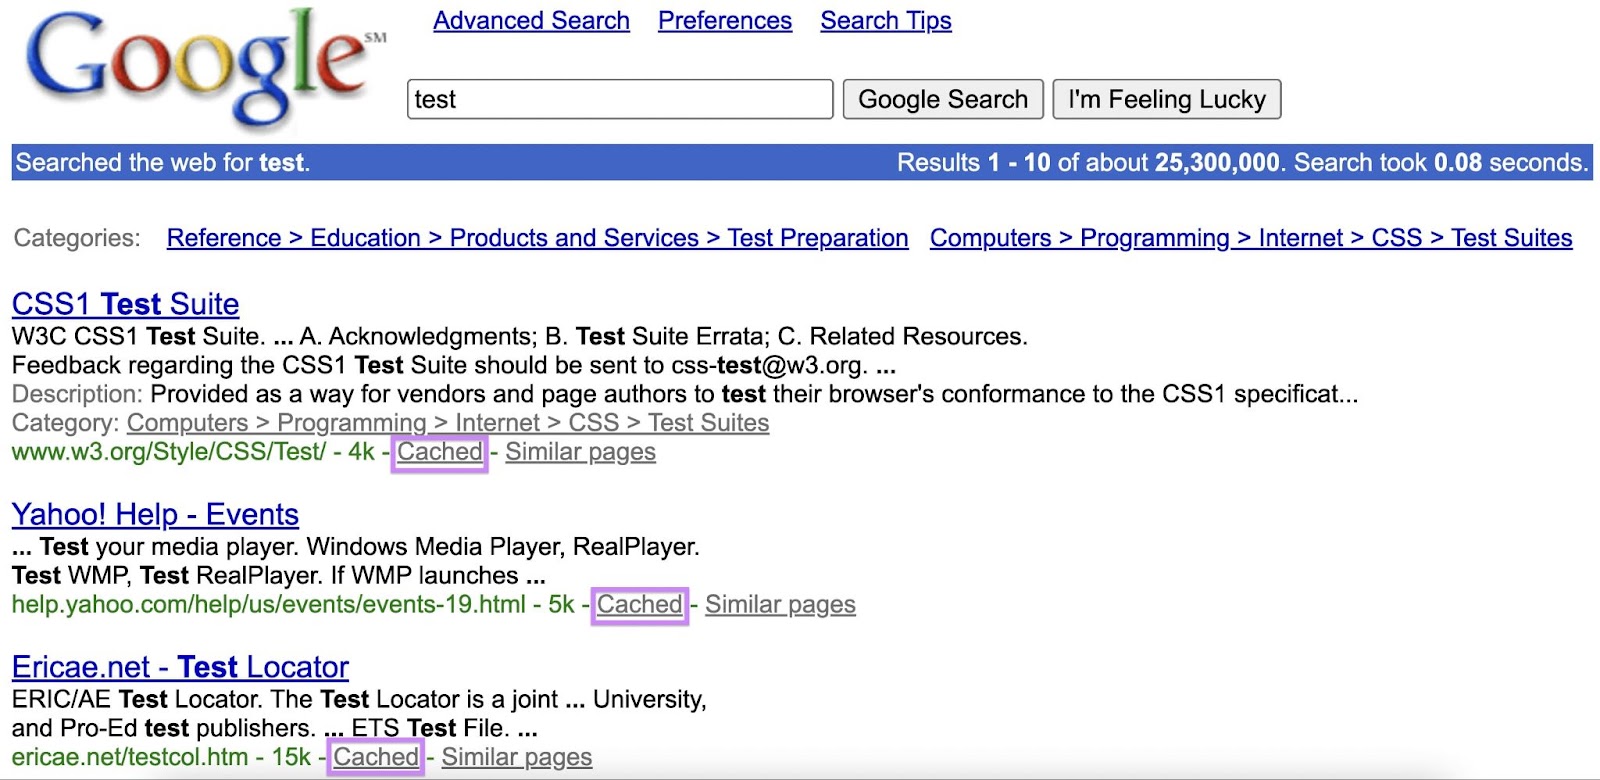 Google SERP on Dec. 3, 2000